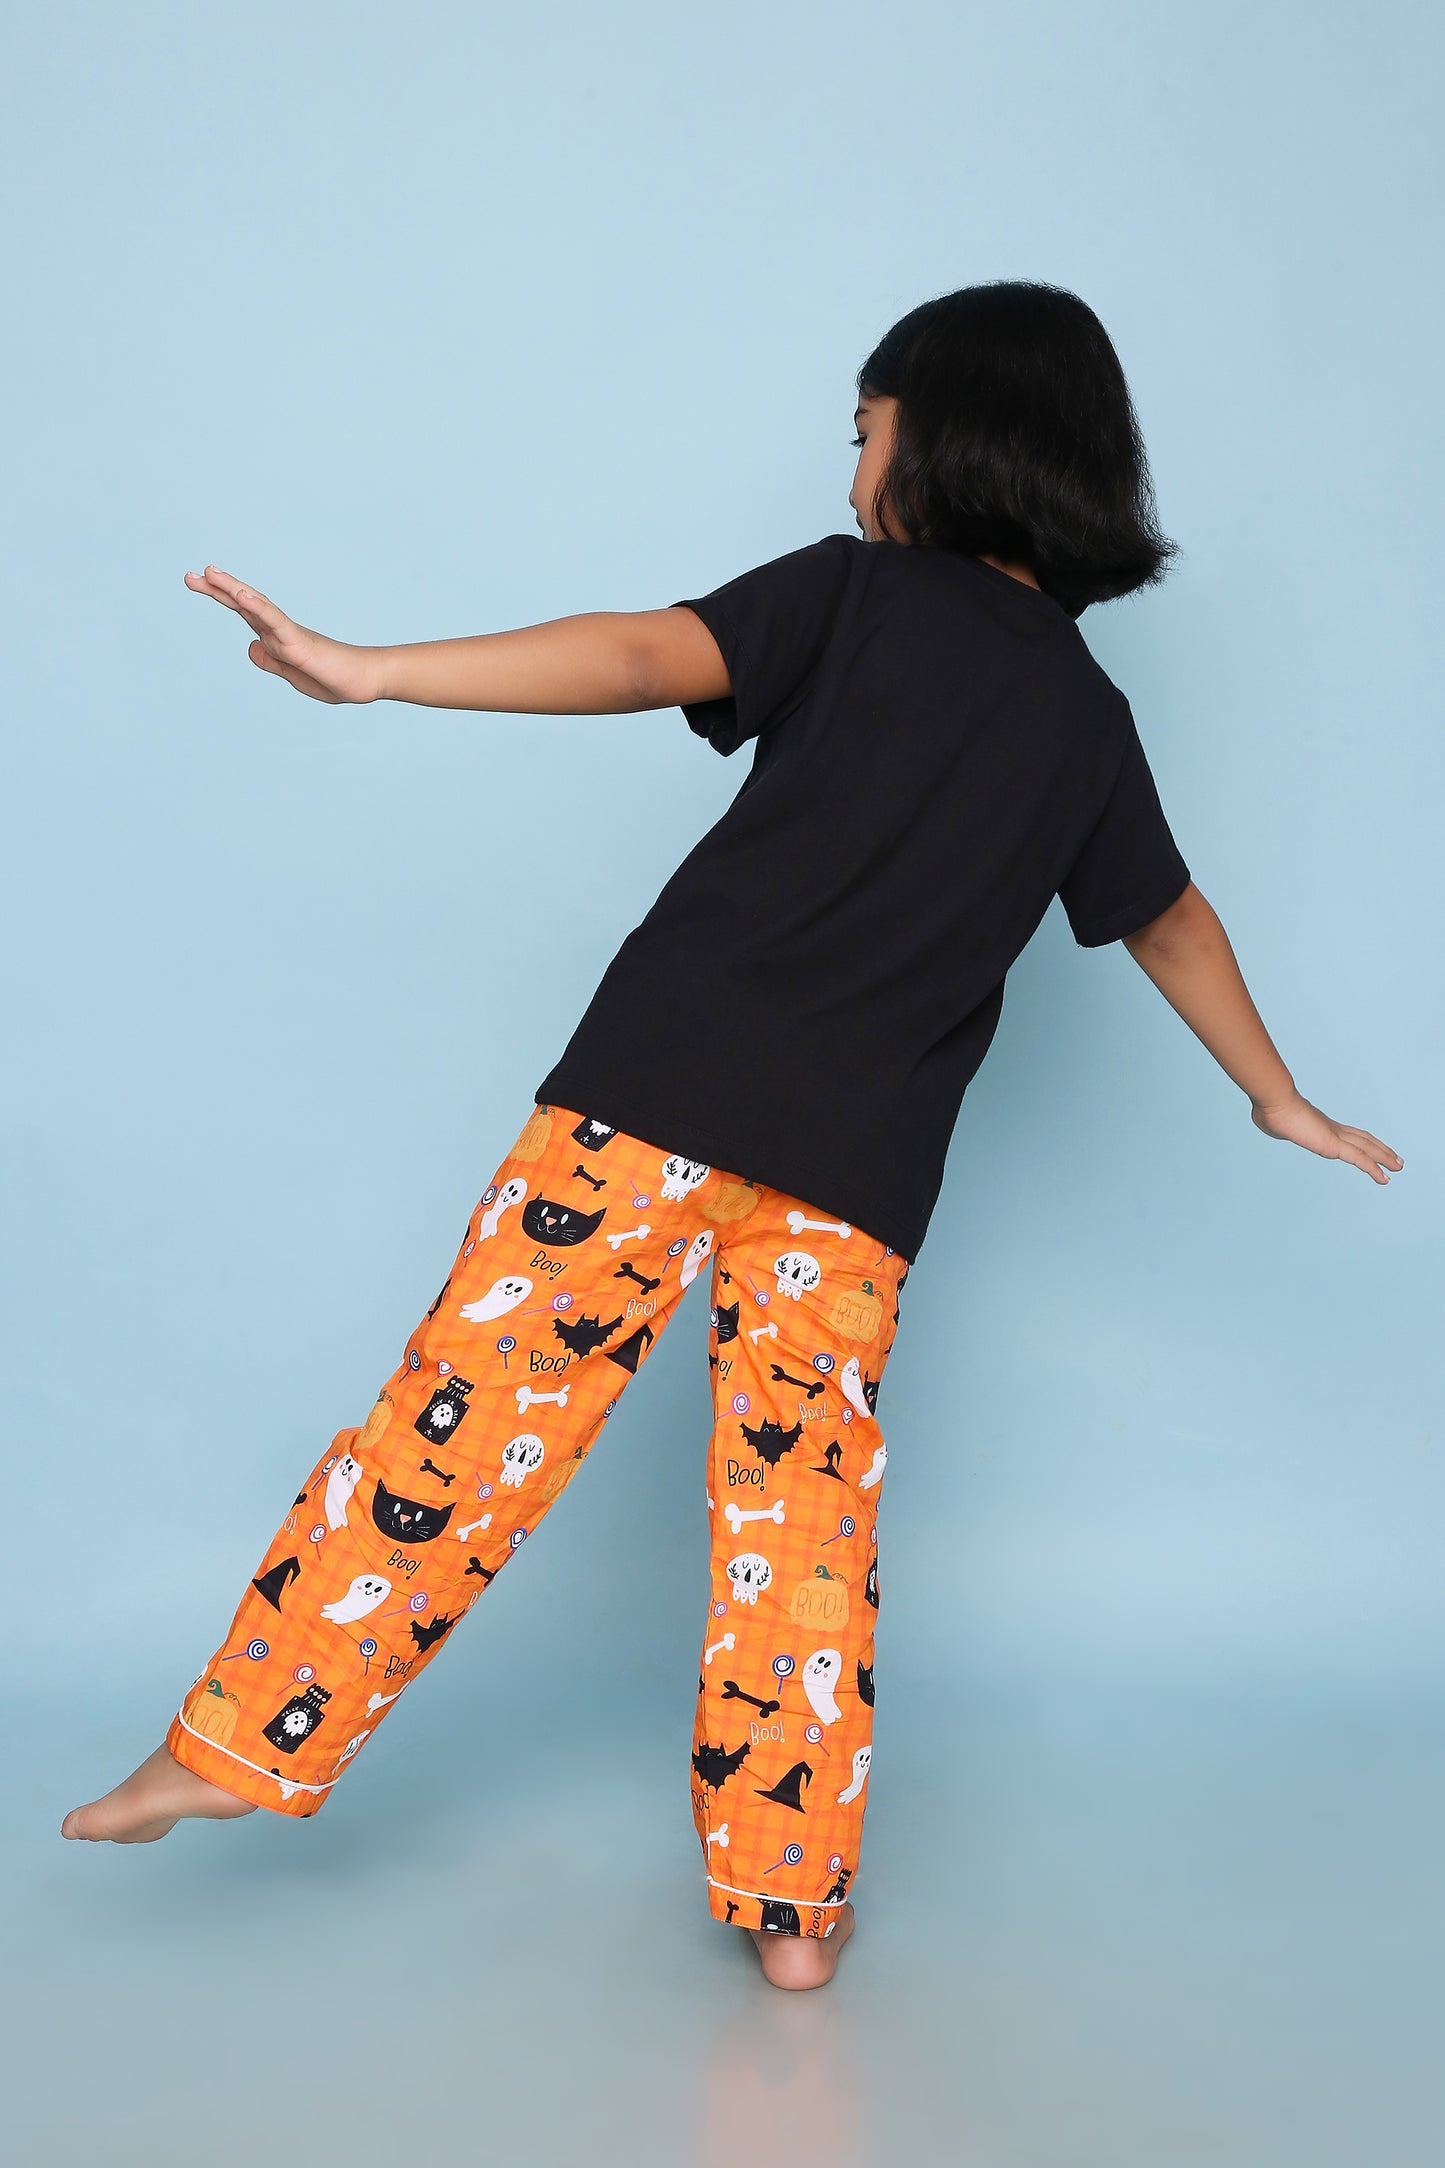 Haloween Print T-shirt and Pyjama- Black and orange